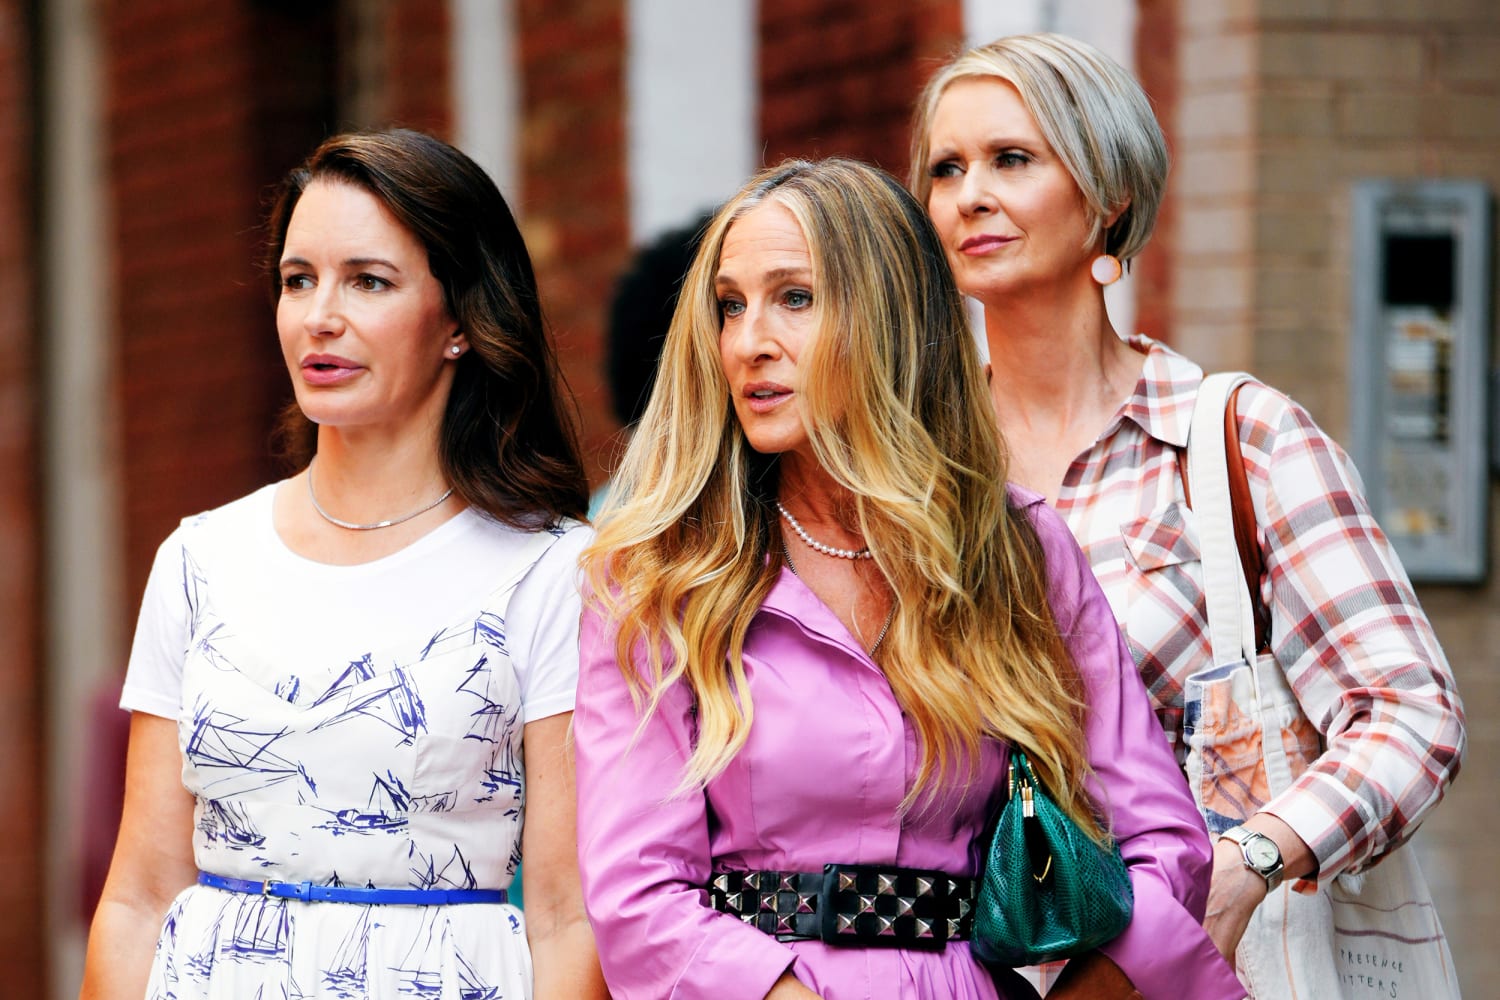 Sarah Jessica Parker, Kristin Davis, Cynthia Nixon break silence on accusations against Chris Noth